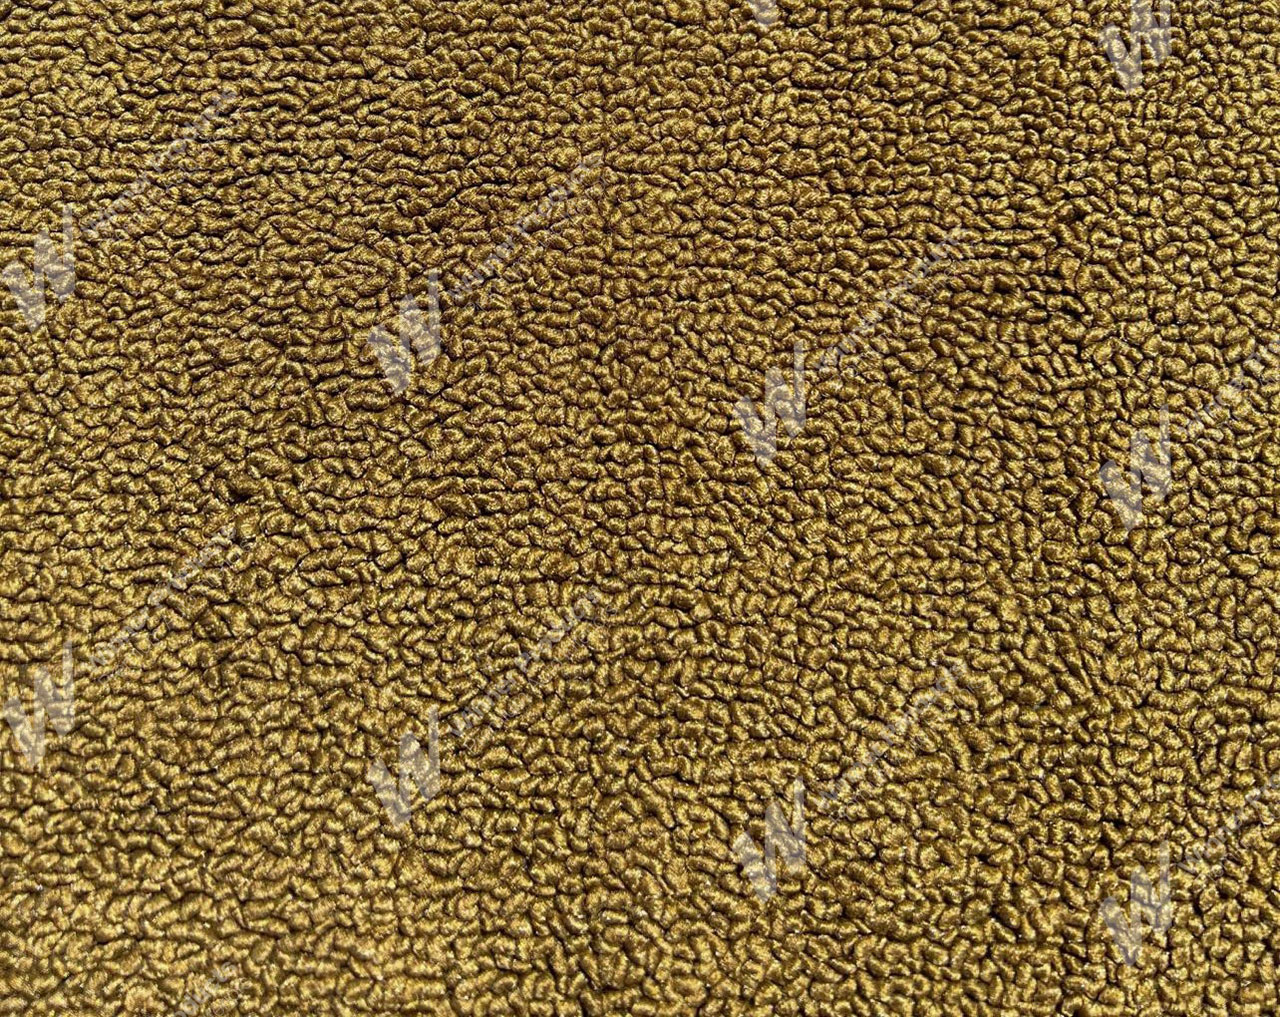 Holden Kingswood HG Kingswood Wagon 11E Antique Gold Carpet (Image 1 of 1)